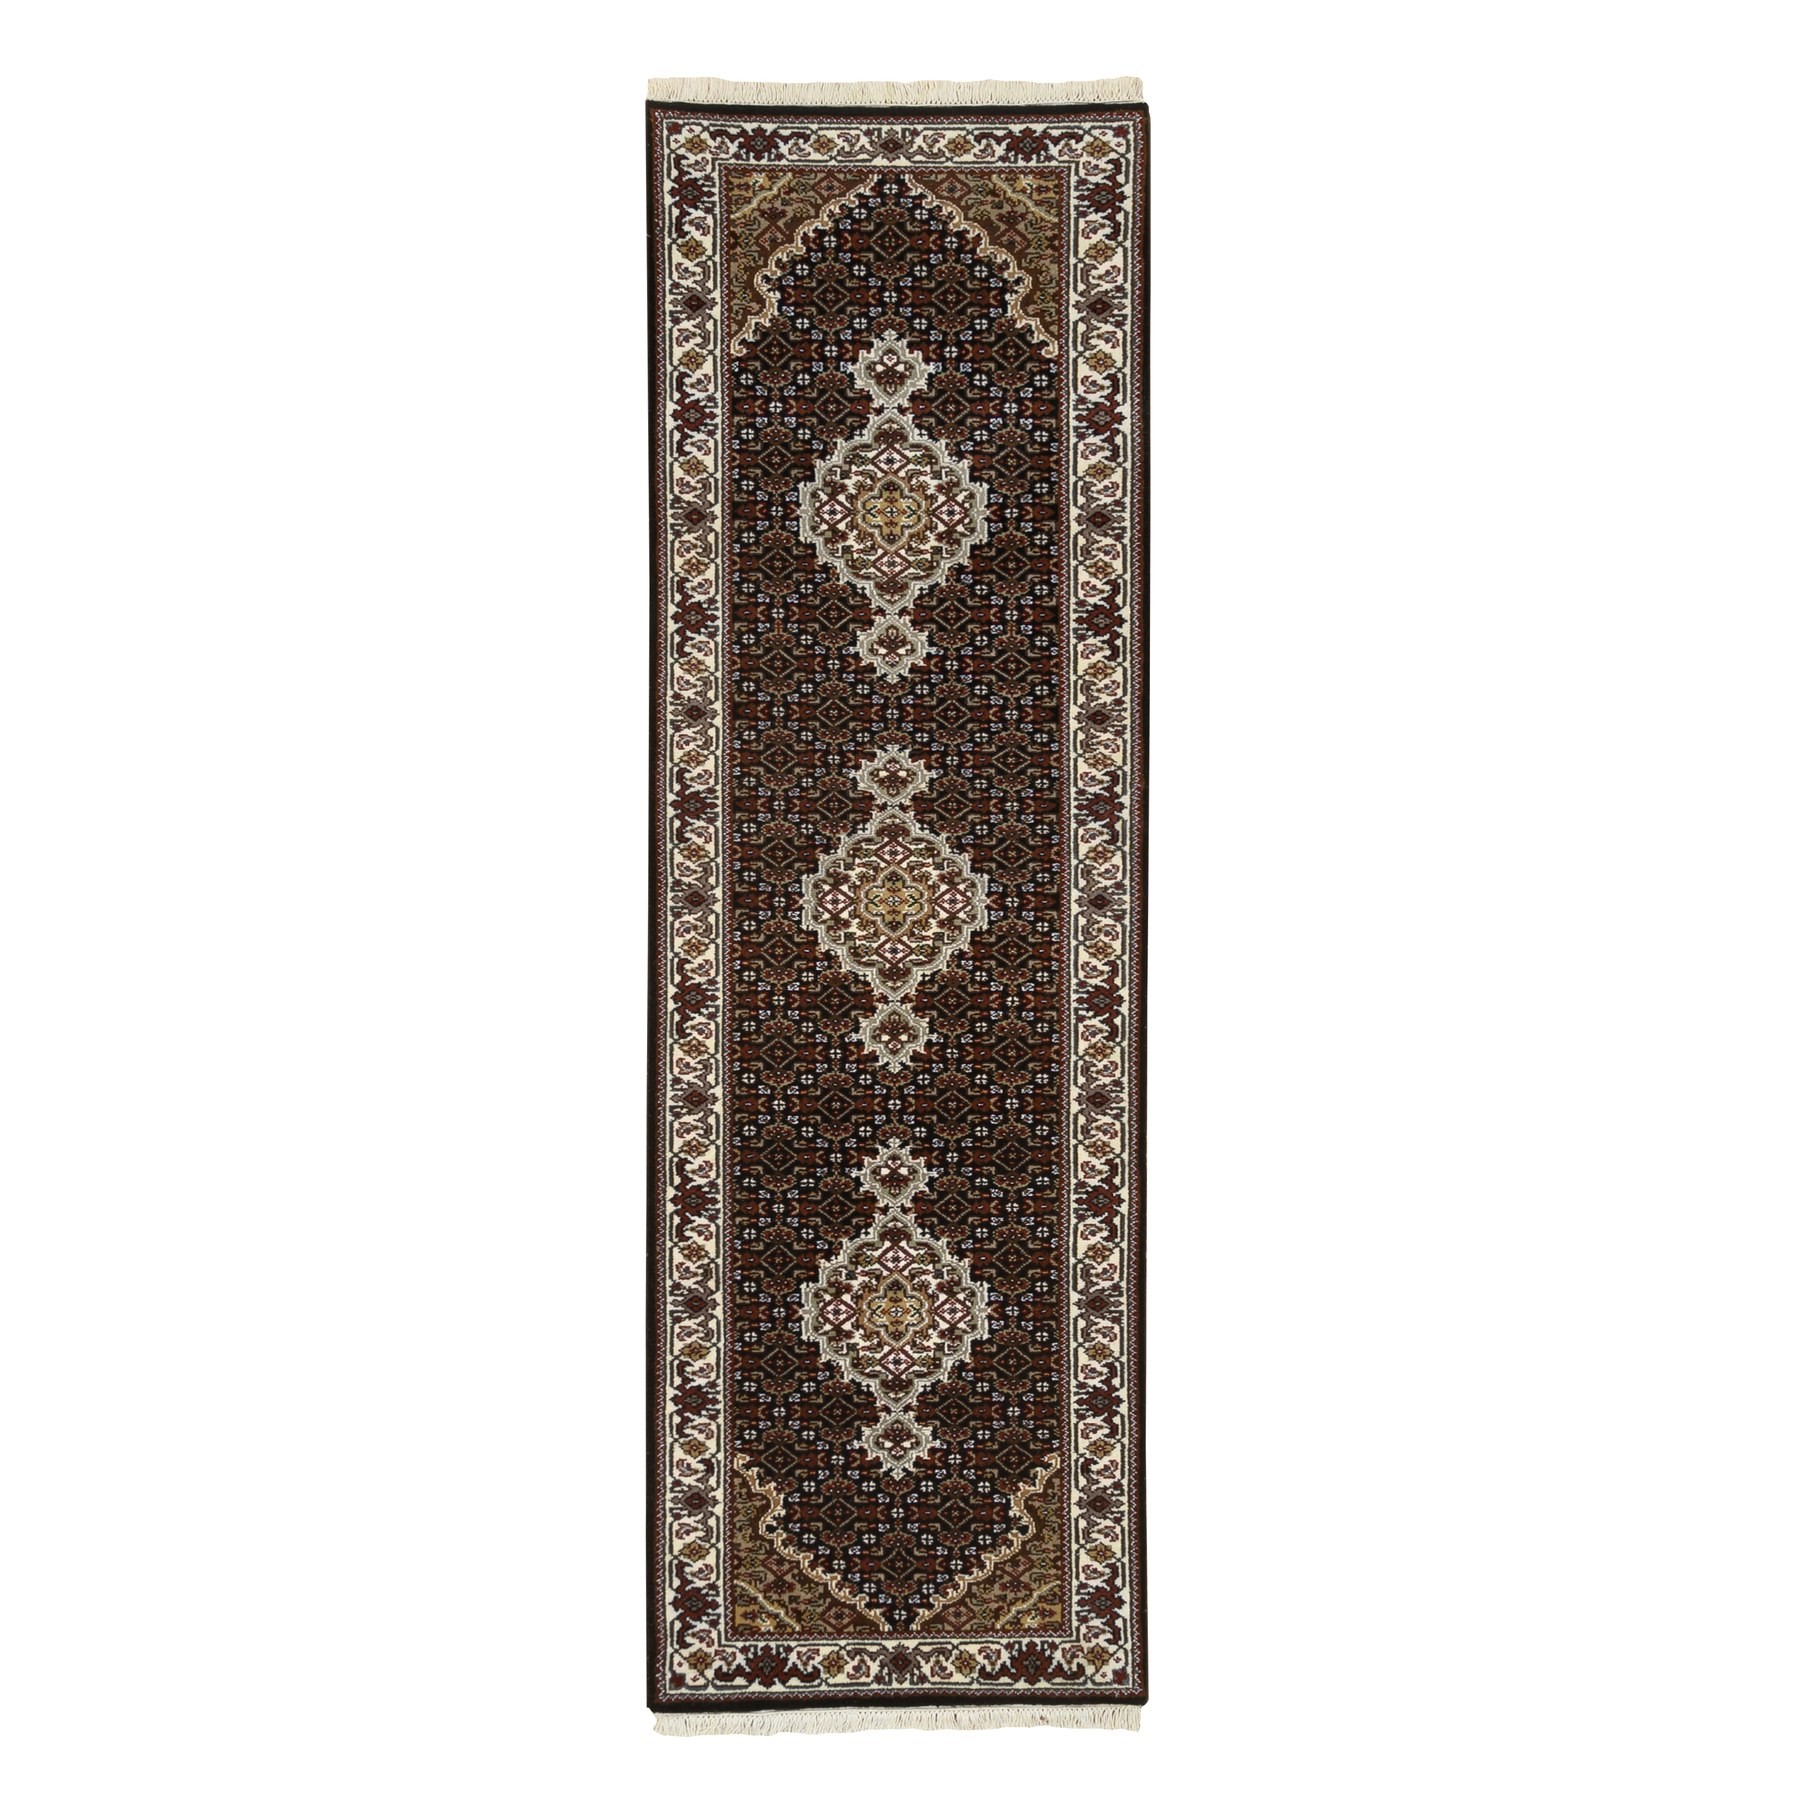 2'x7'10" Rich Black, Tabriz Mahi with Fish Medallion Design, 175 KPSI, 100% Wool, Hand Woven, Runner Oriental Rug 